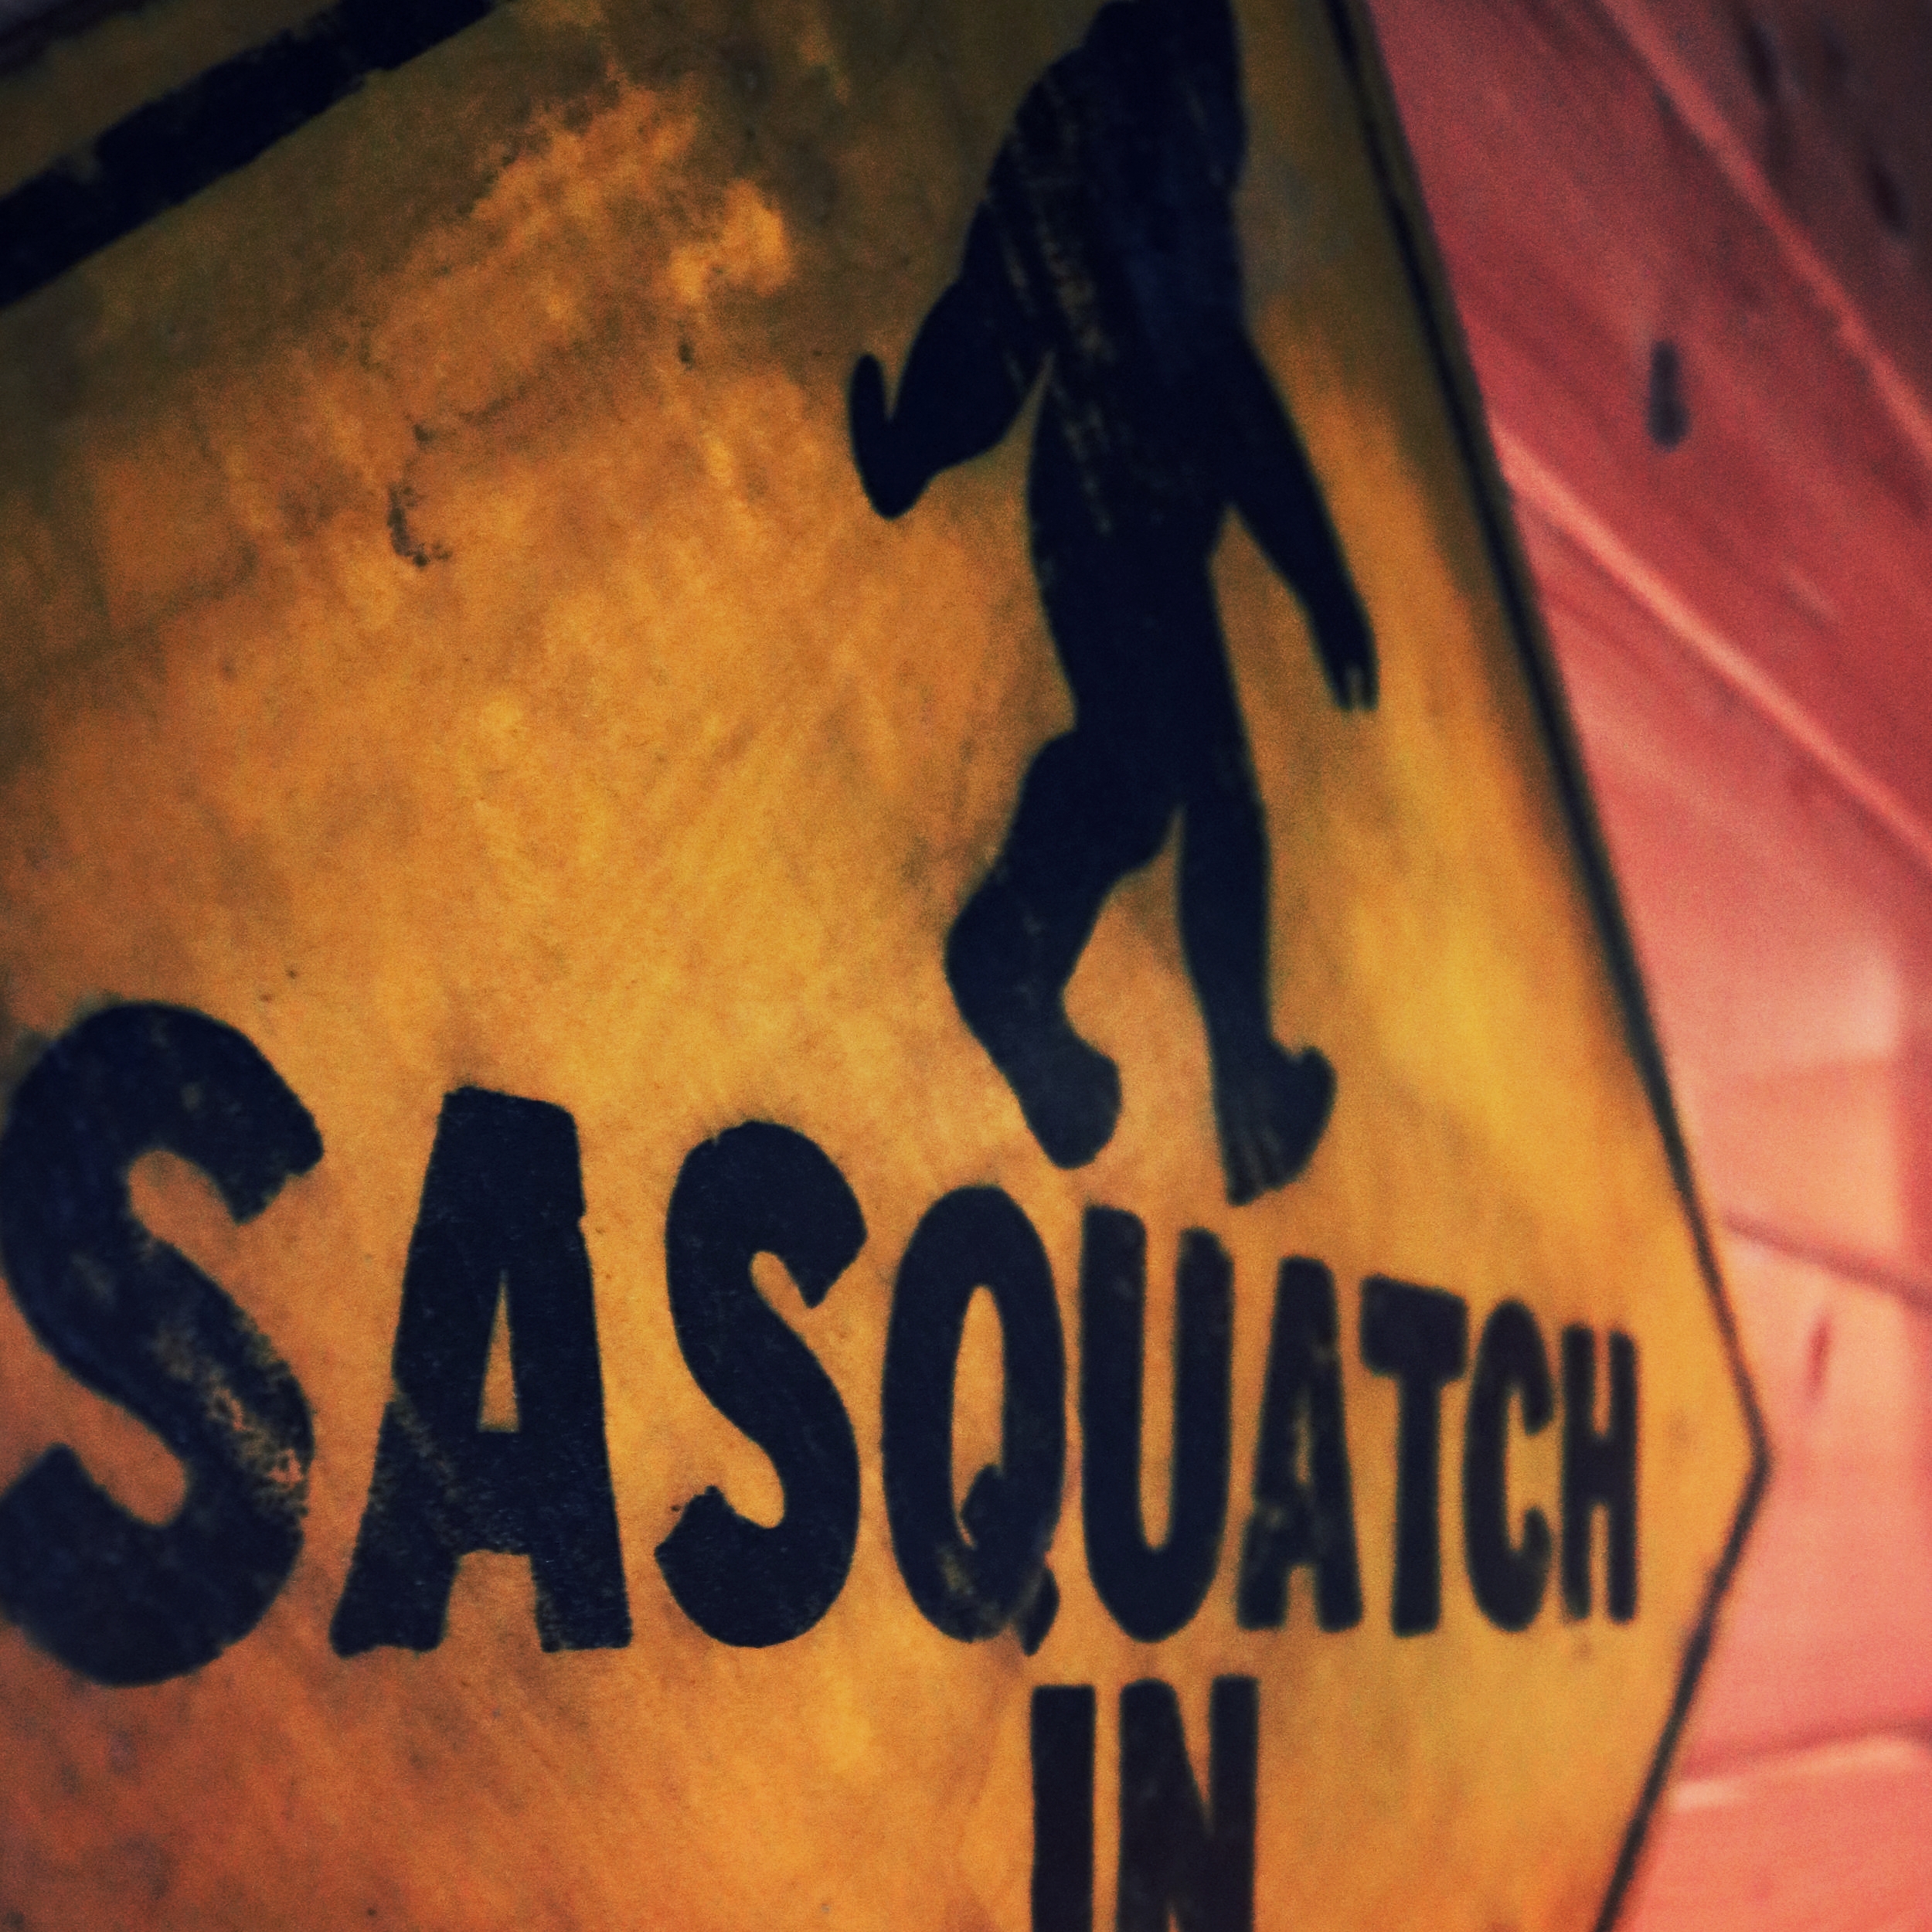 Dancing sasquatch banff's best nightclub